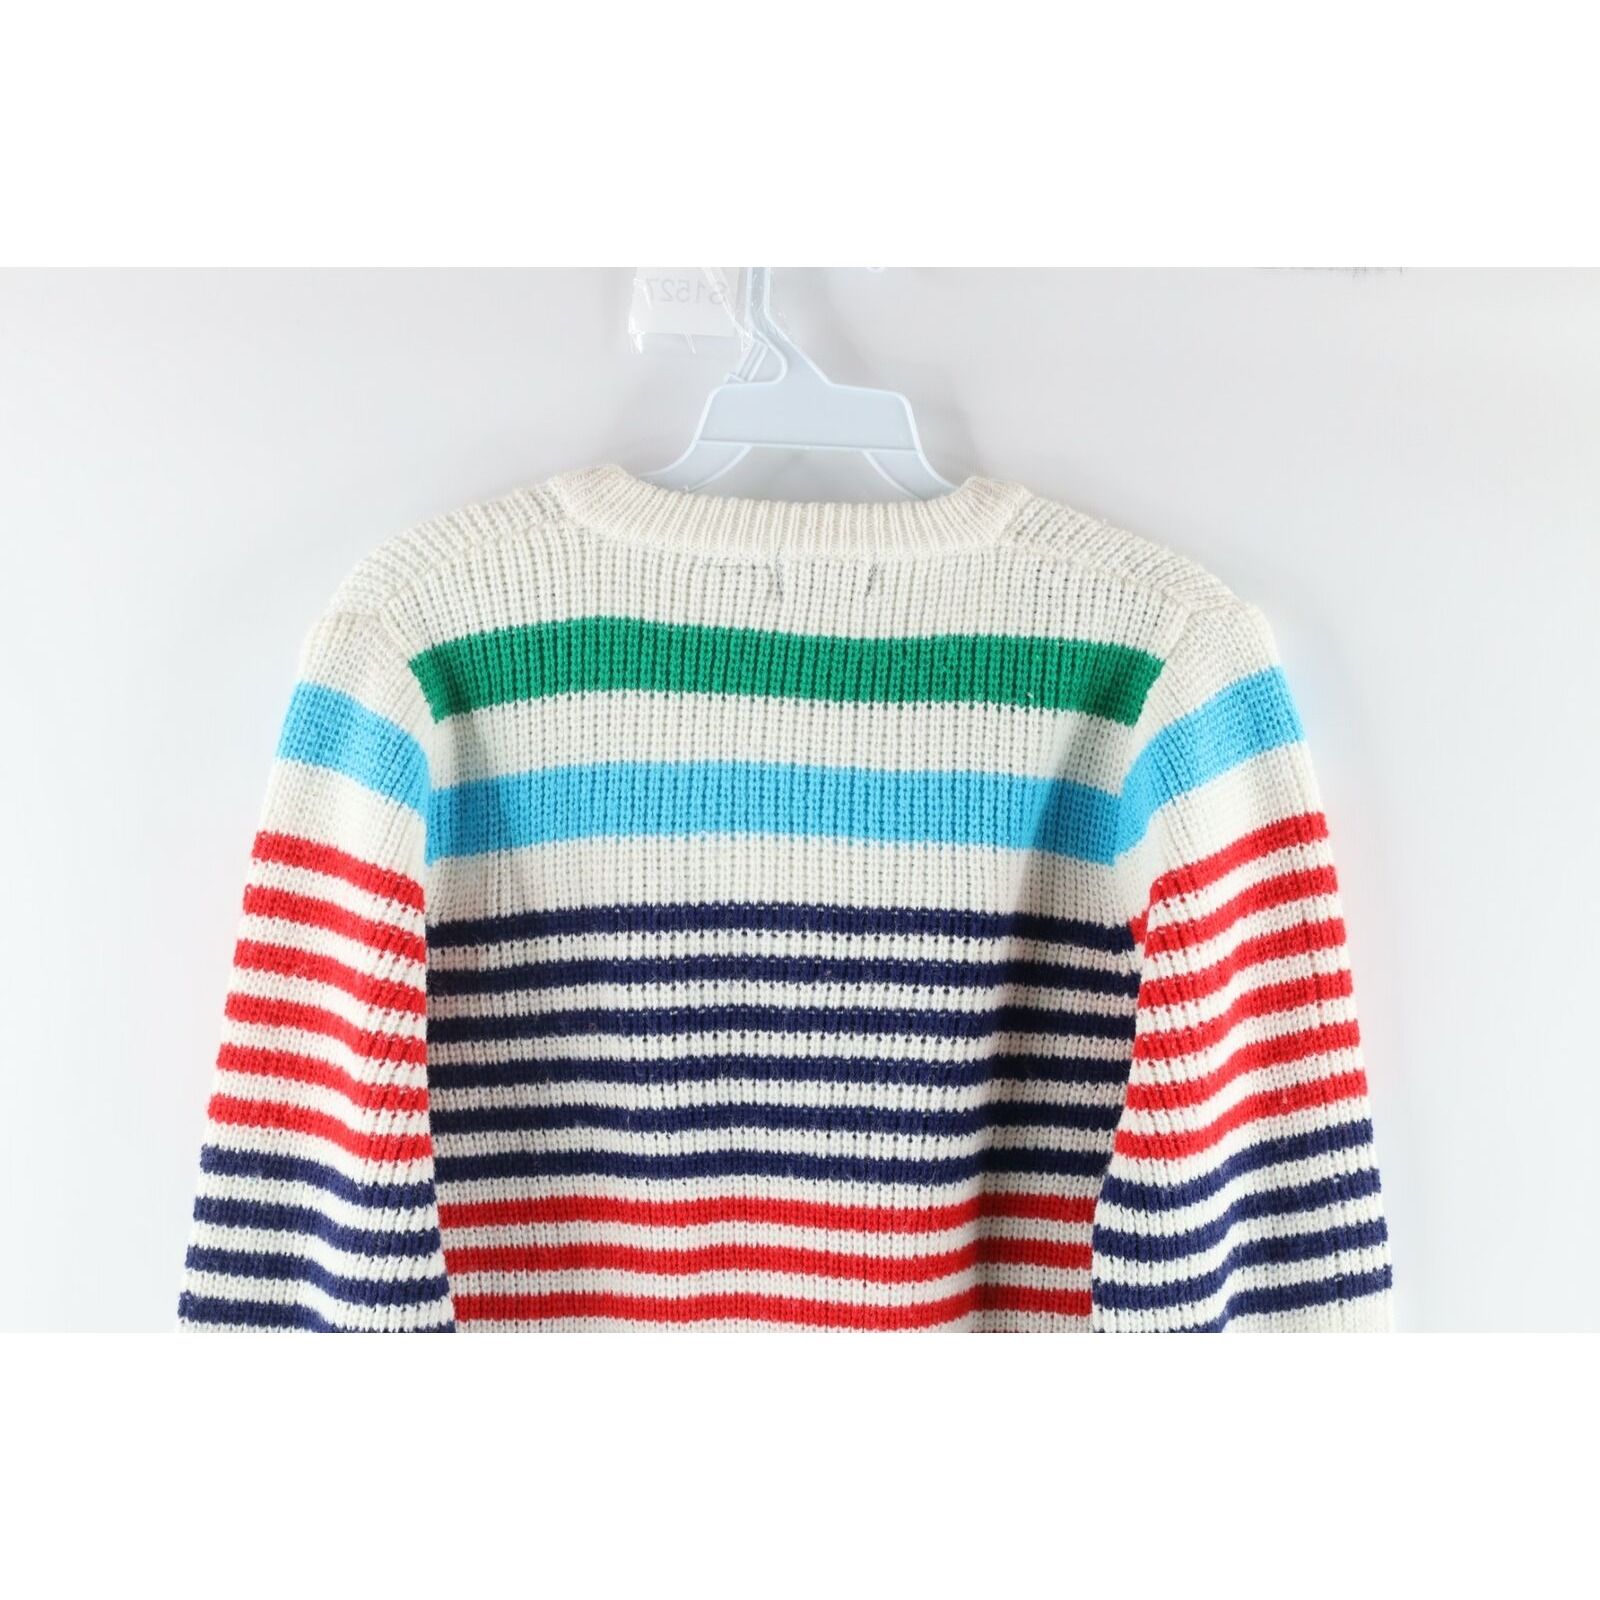 Vintage Vintage 70s Rockabilly Medium Rainbow Striped Knit Sweater Size M / US 6-8 / IT 42-44 - 6 Thumbnail